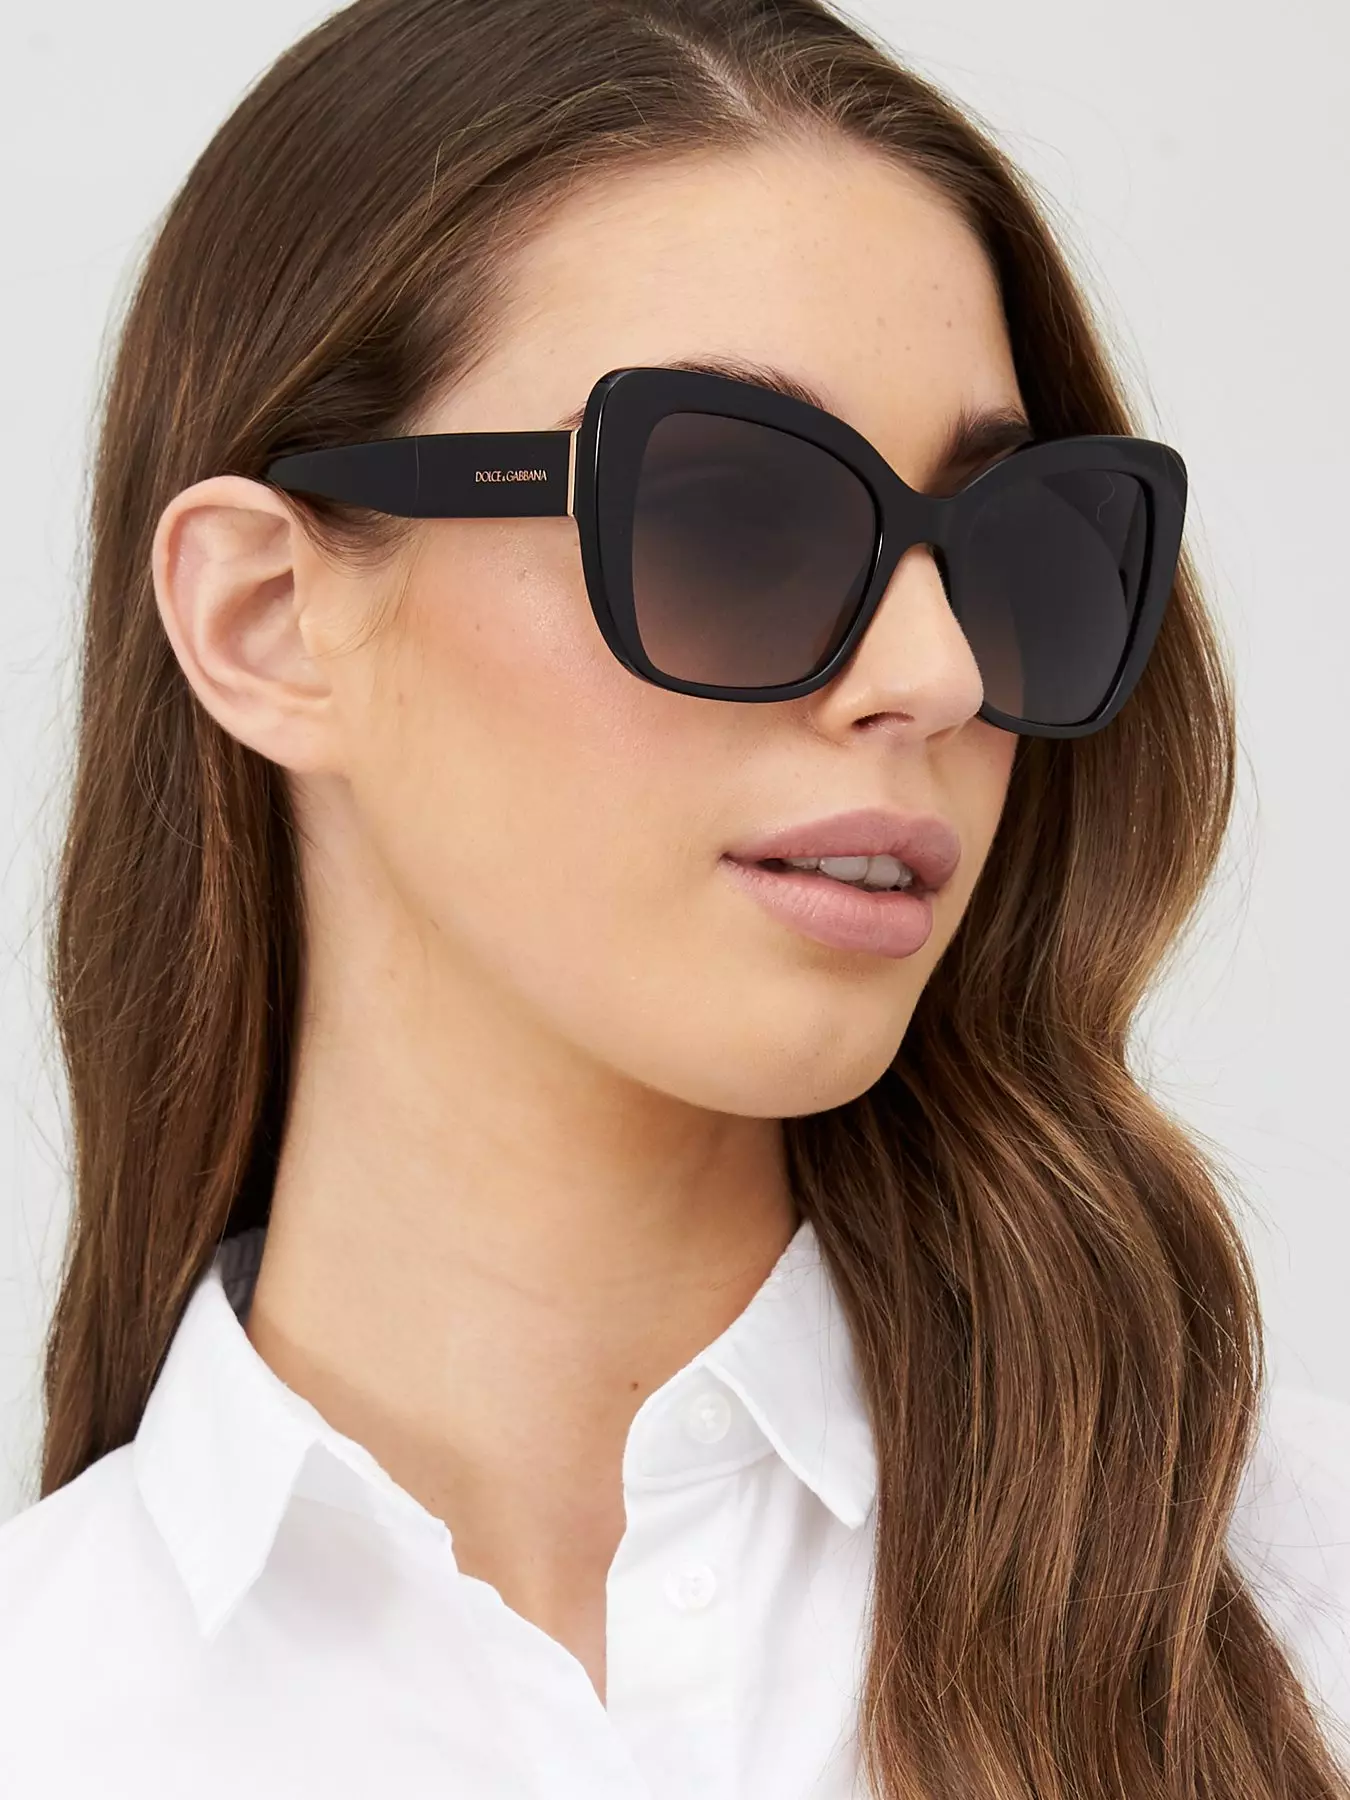 Dolce & gabbana | Sunglasses | Accessories | Women 